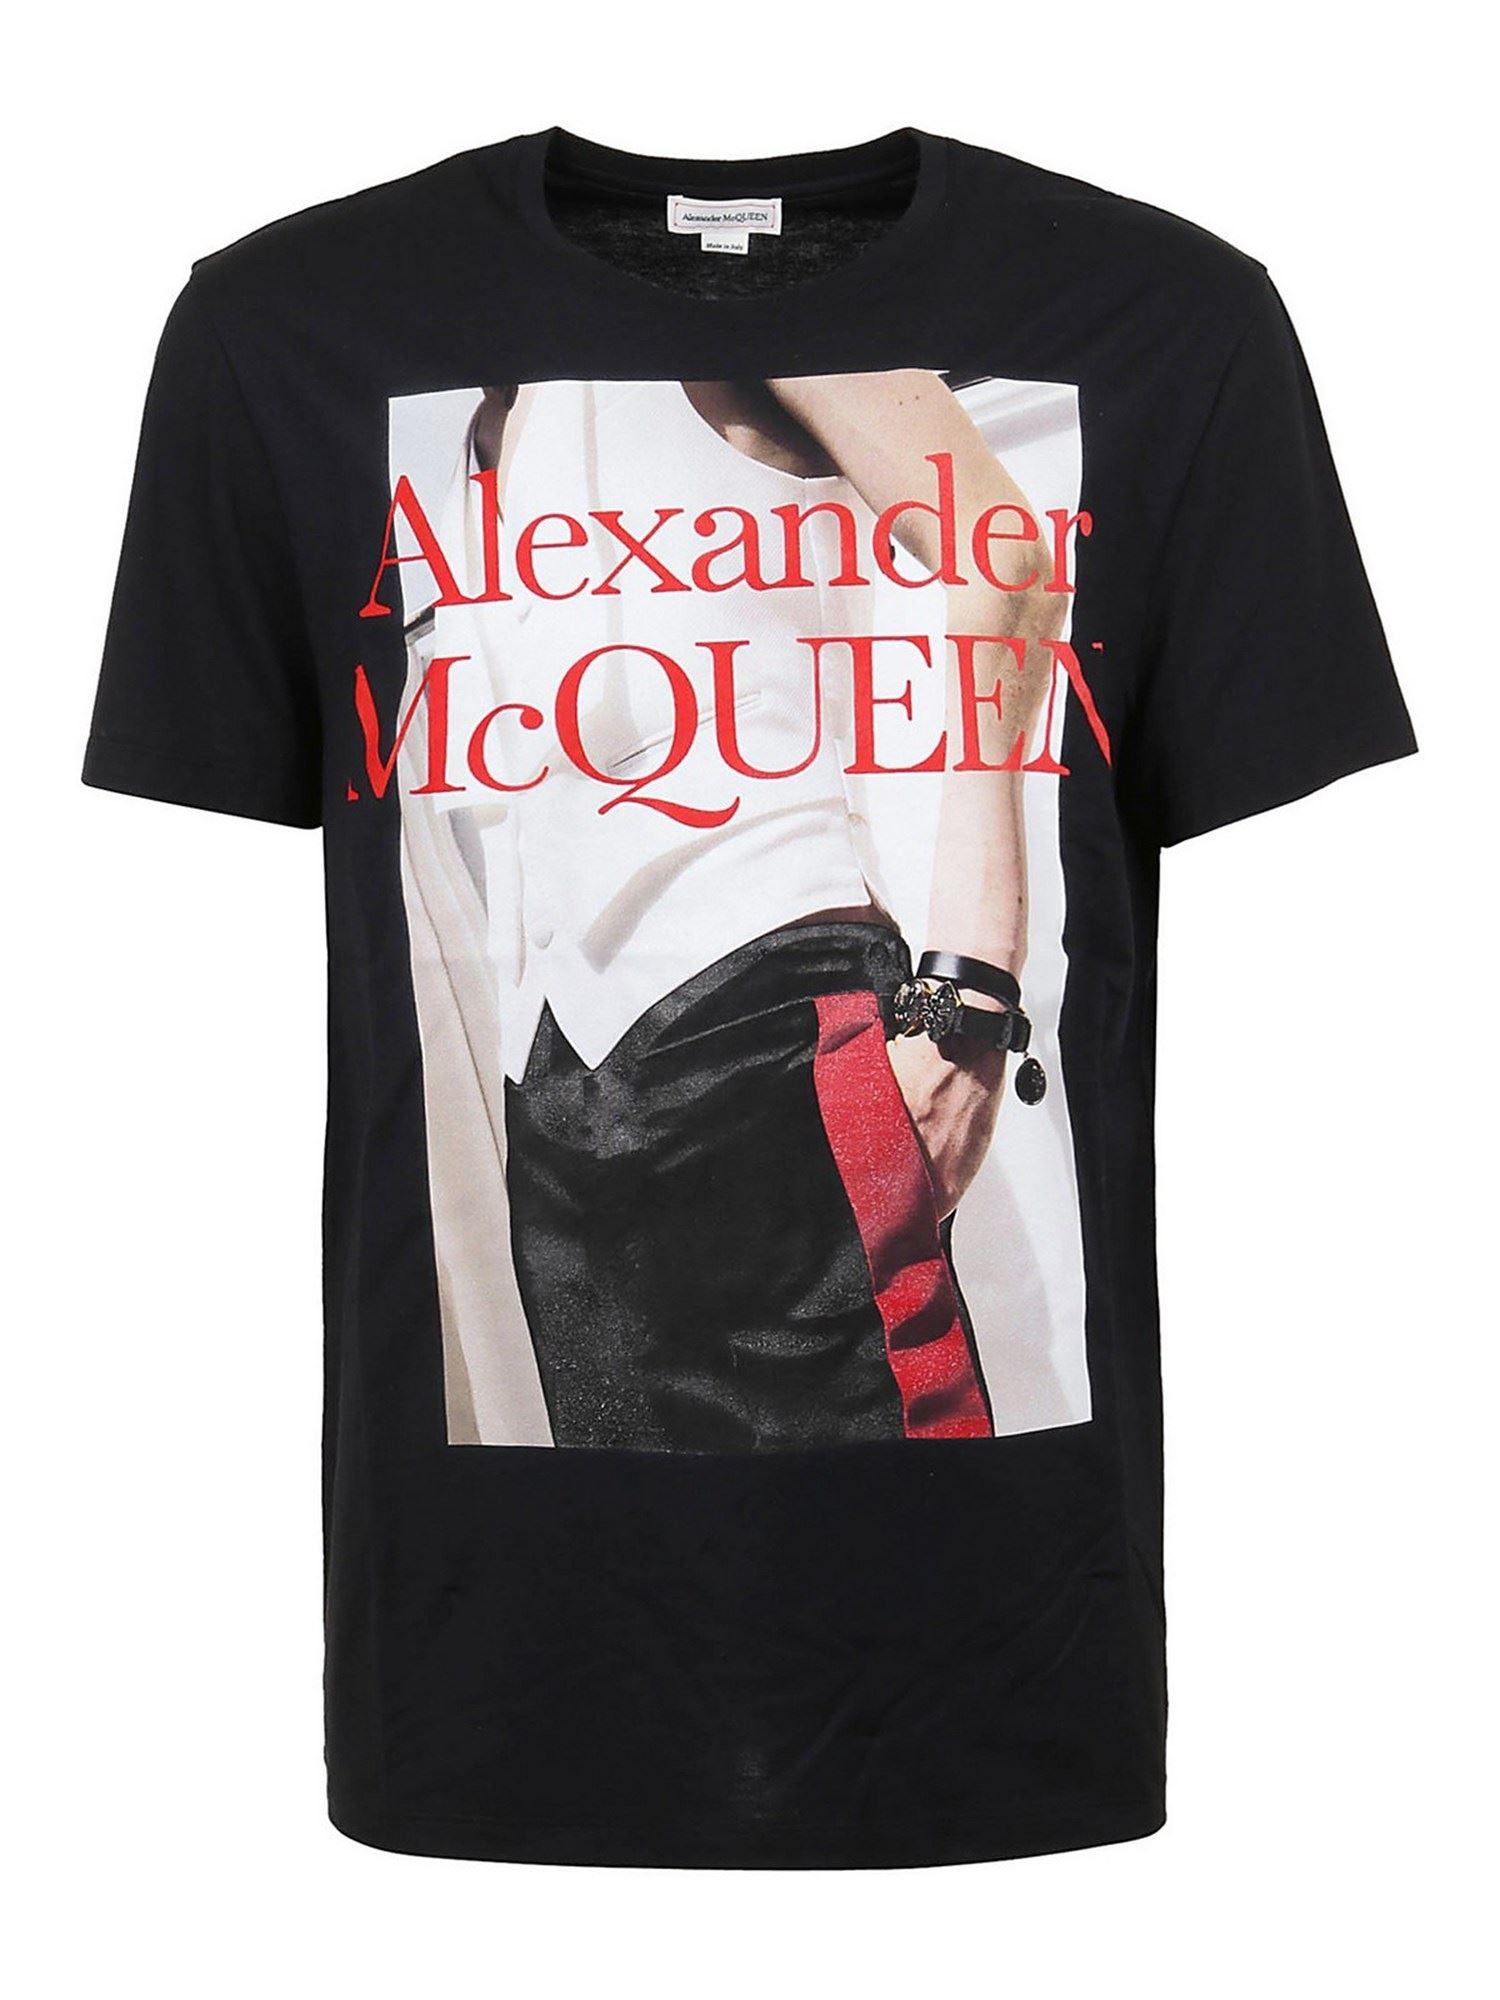 Alexander McQueen Cotton Logo Print T-shirt in Black for Men - Lyst